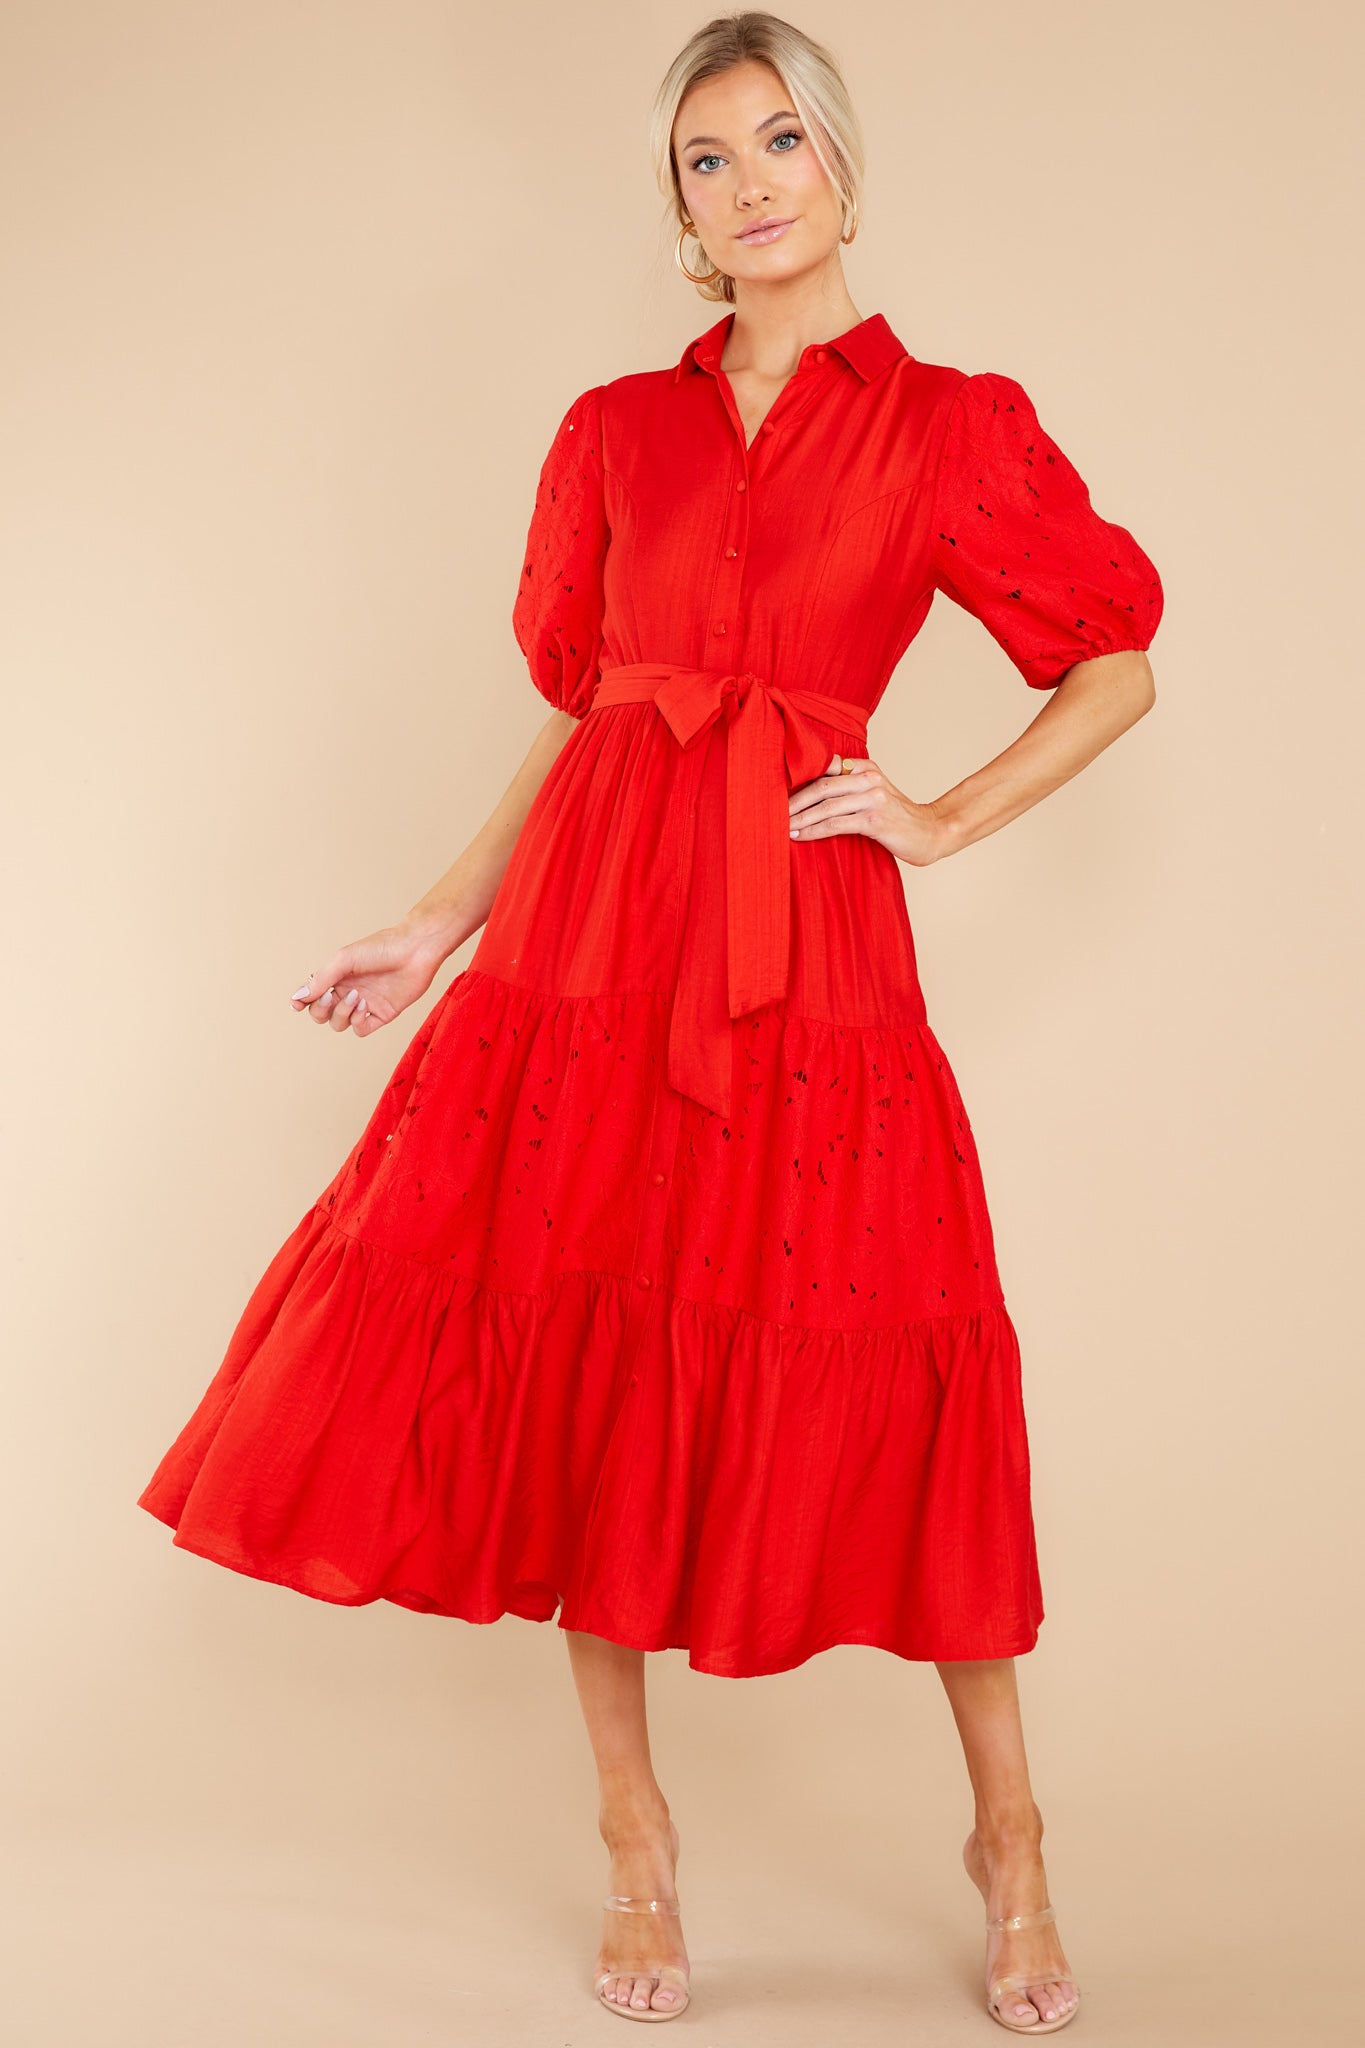 Cute Floral Print Dress - Red Midi Dress - Short Sleeve Dress - Lulus